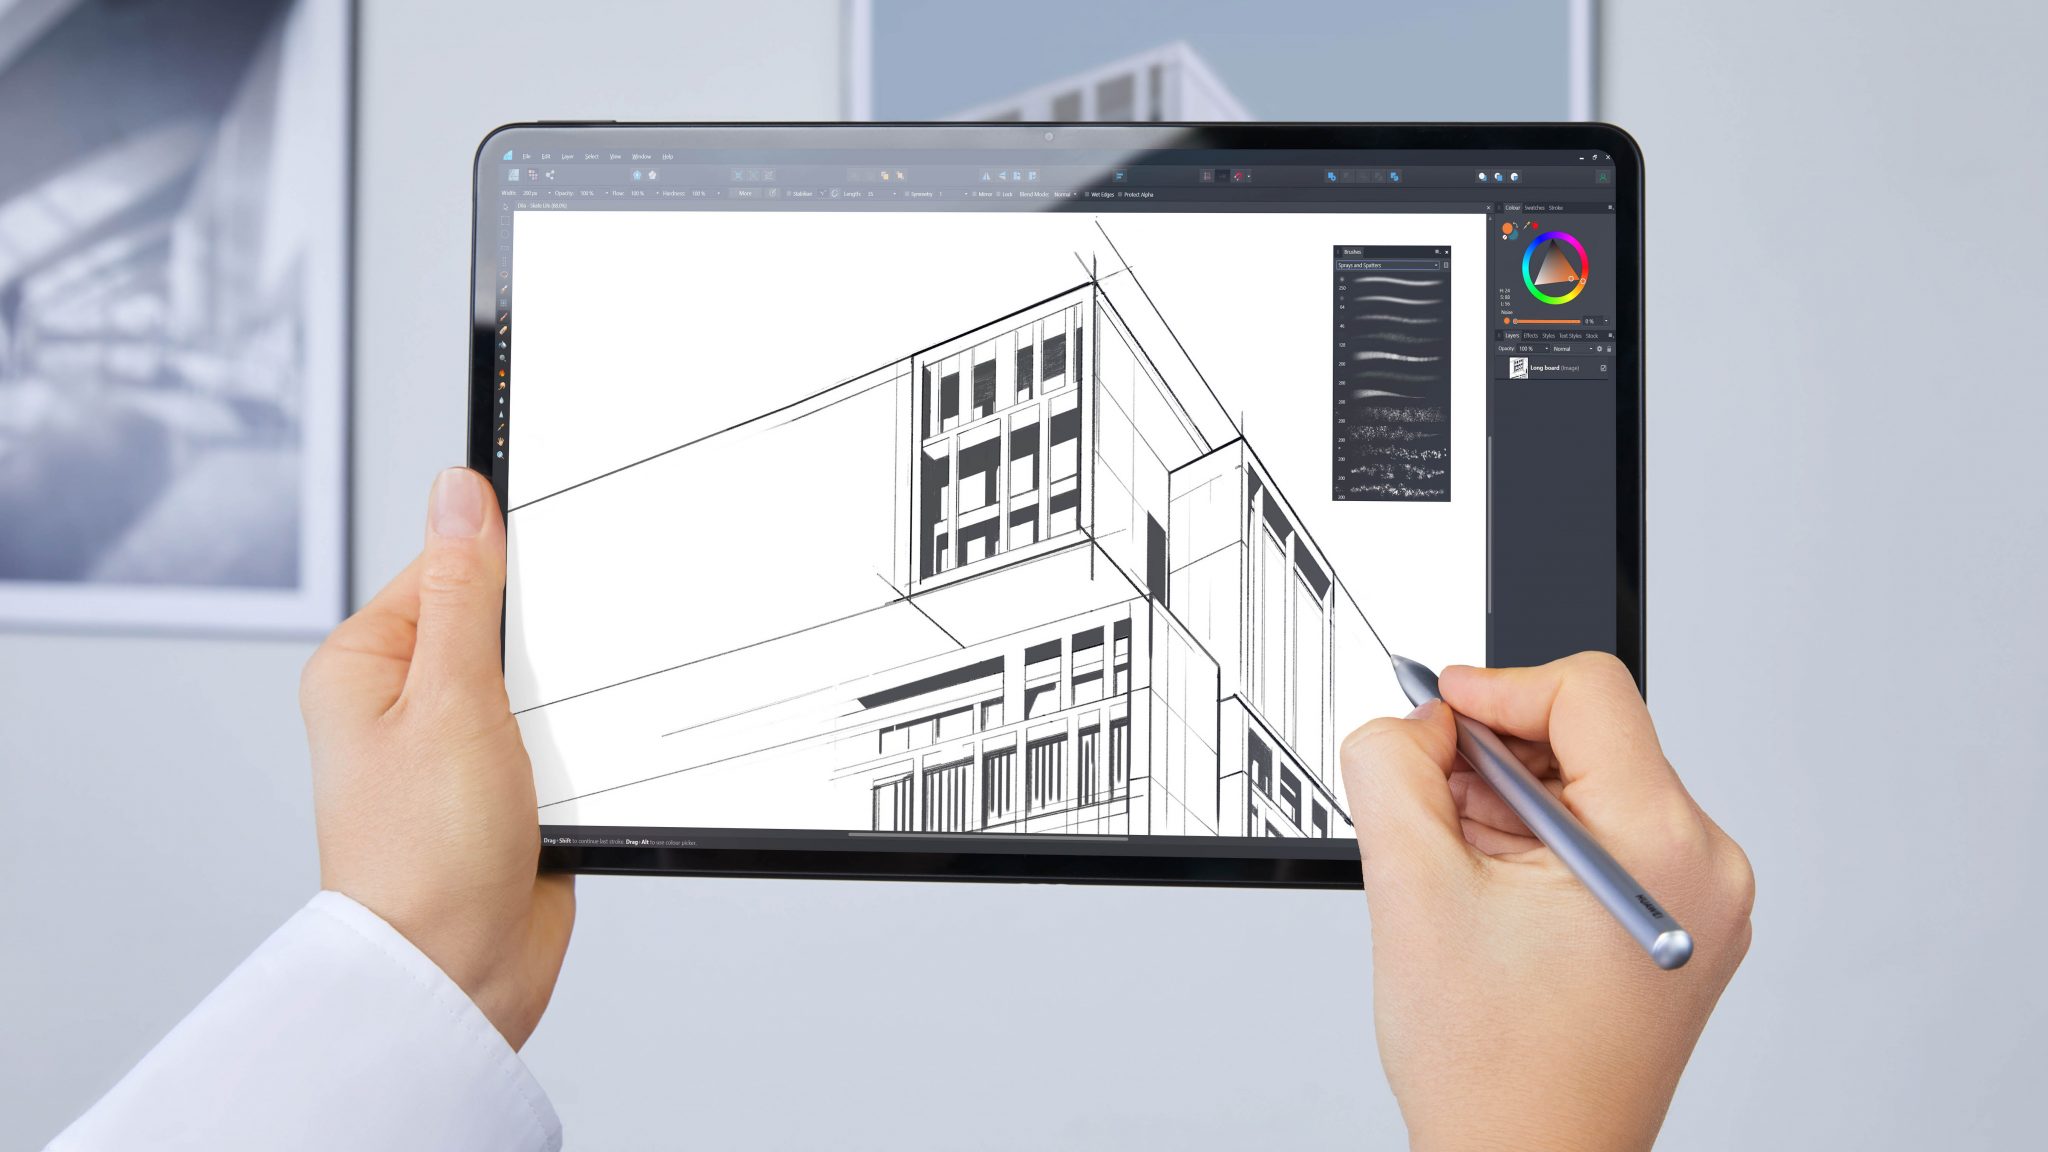 MWC 2022: HUAWEI MateBook E und „Smart Office Super Device“ offiziell vorgestellt